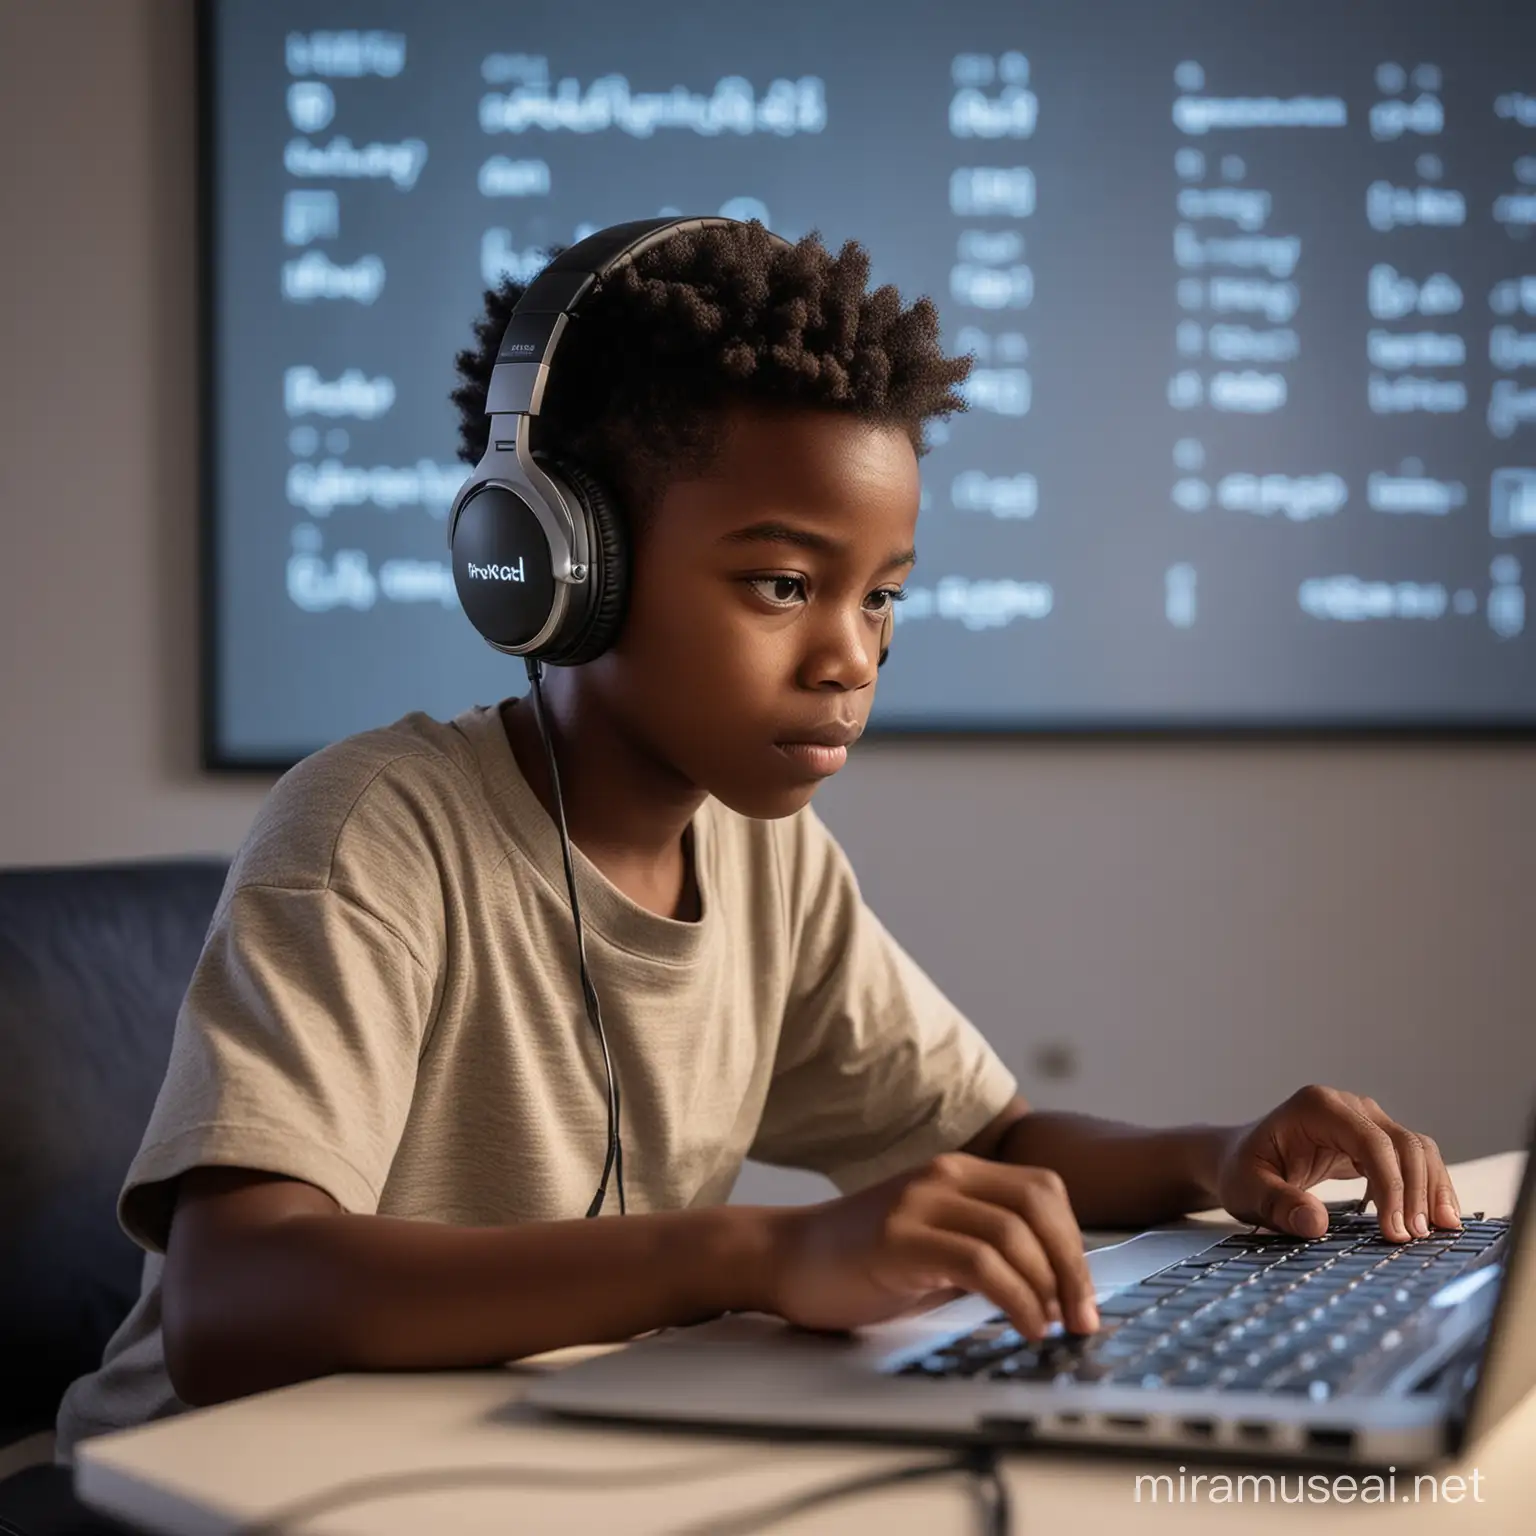 African Boy Programming Headphones Display in Stylish Room